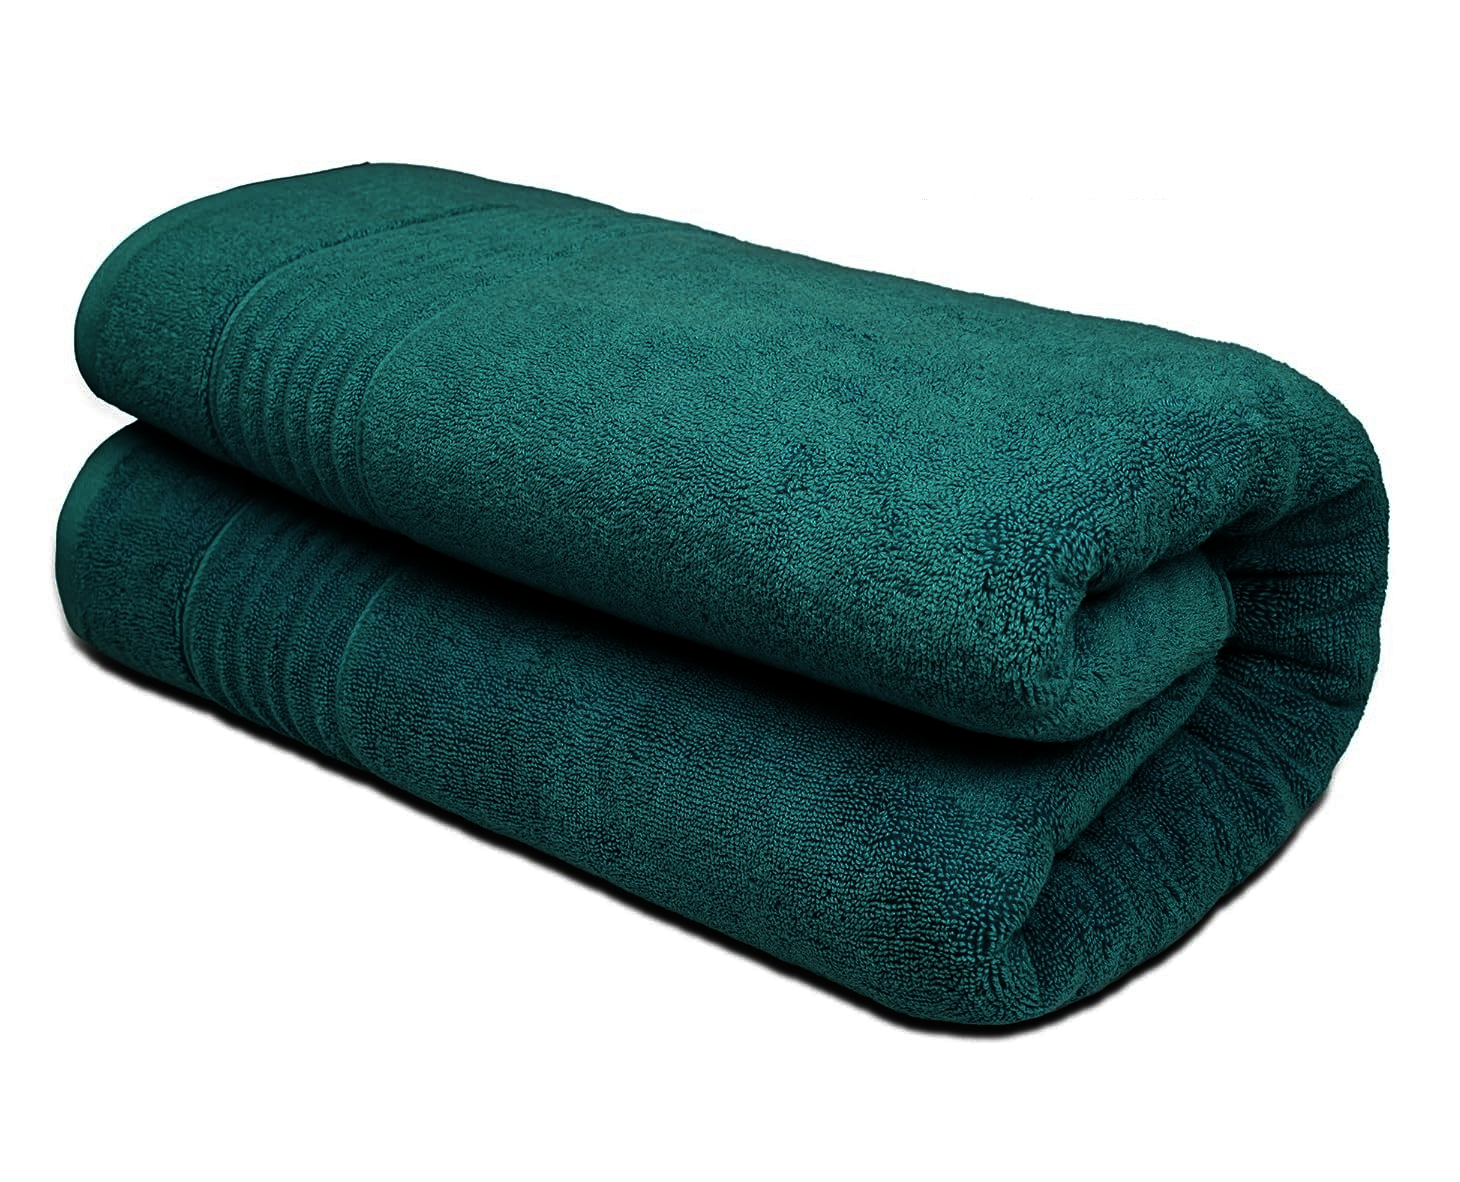 Extra Large Jumbo Bath Sheet Egyptian Cotton Towels 600GSM